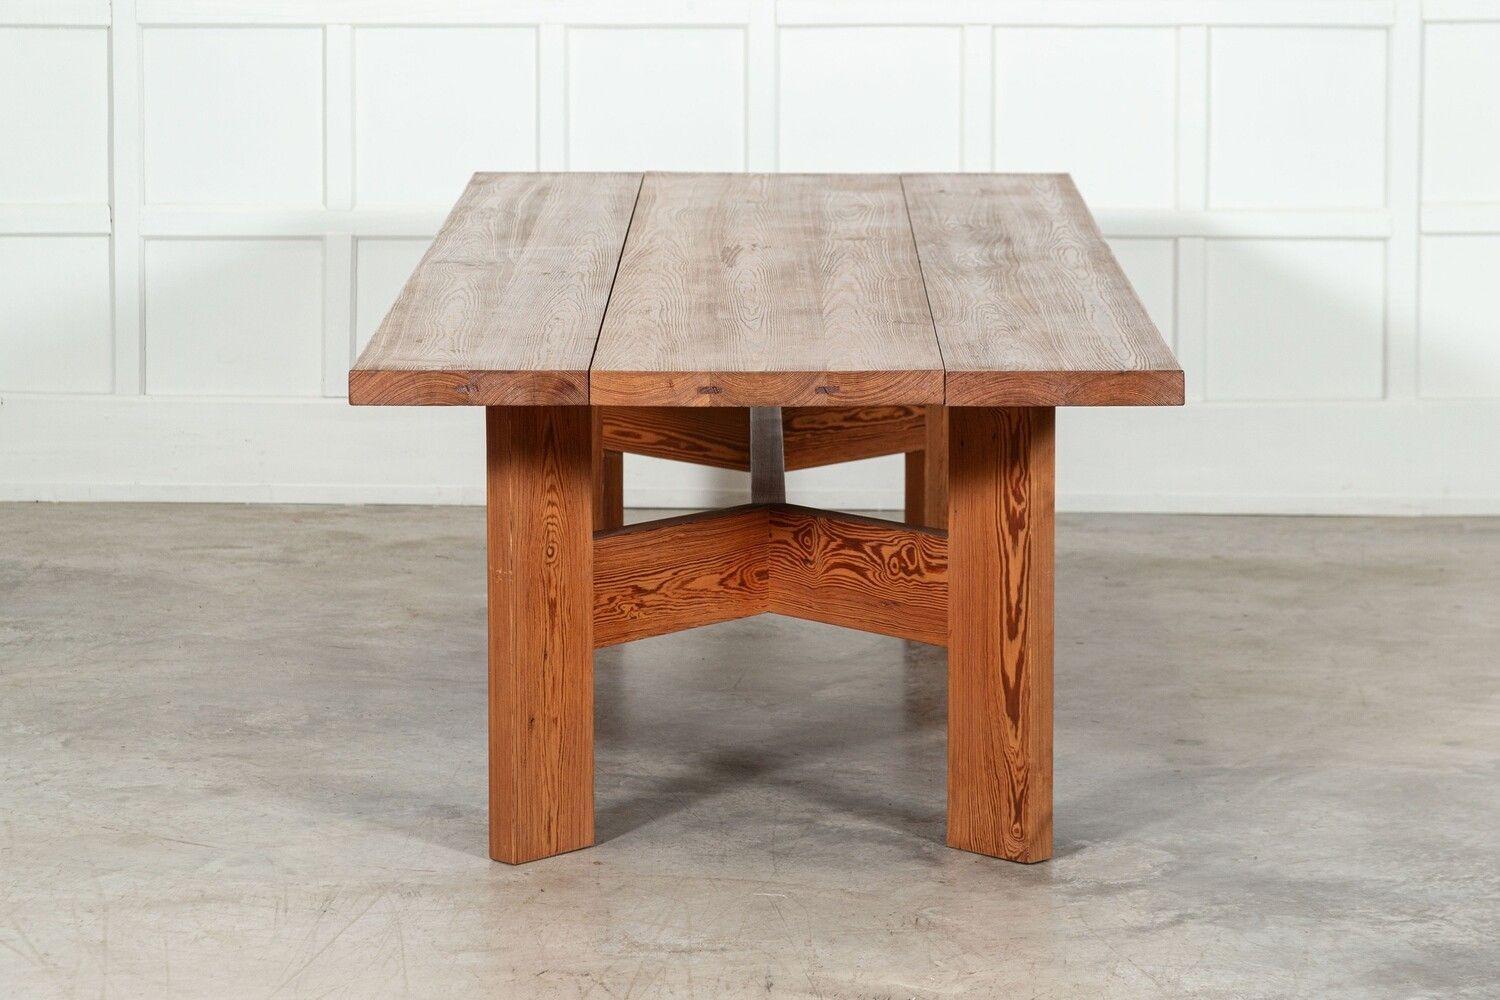 circa Mid 20thC
MidC English Pine Refectory Table / Desk
sku 1644
W243 x D105 x H71 cm